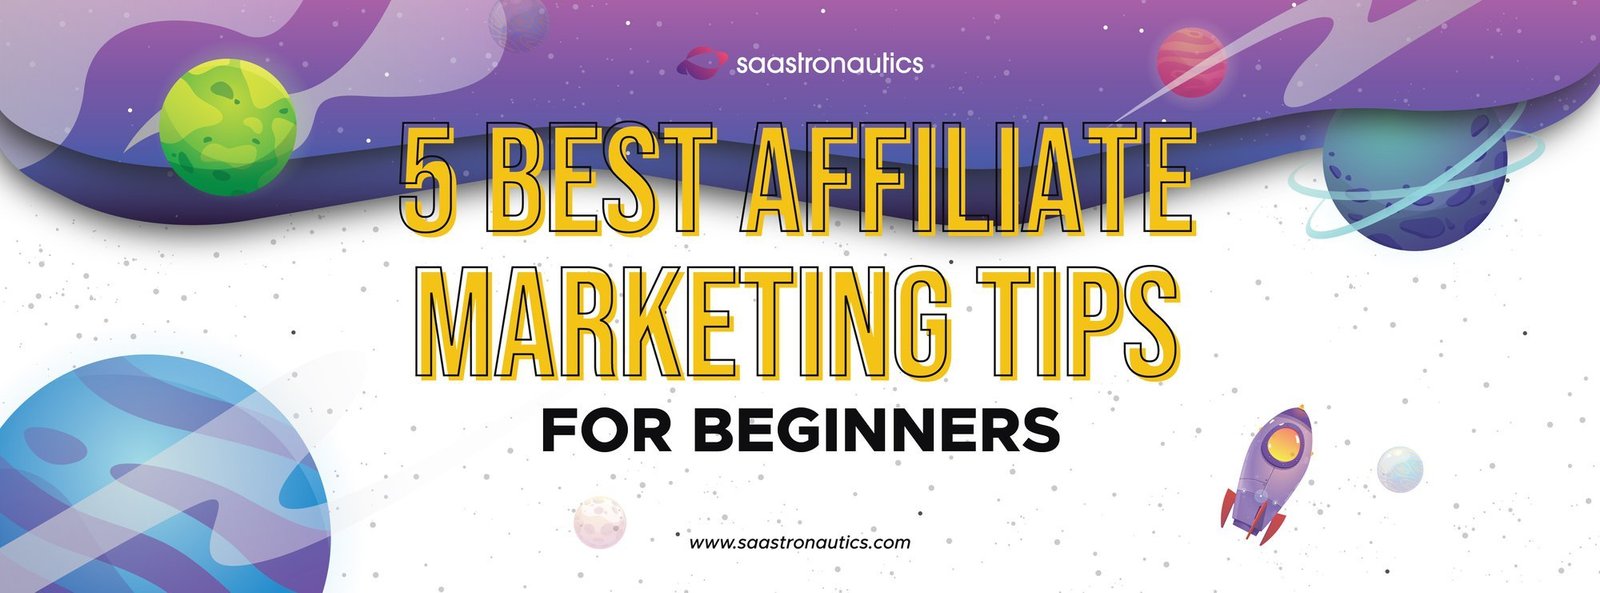 5 Best Affiliate Marketing Tips for Beginners